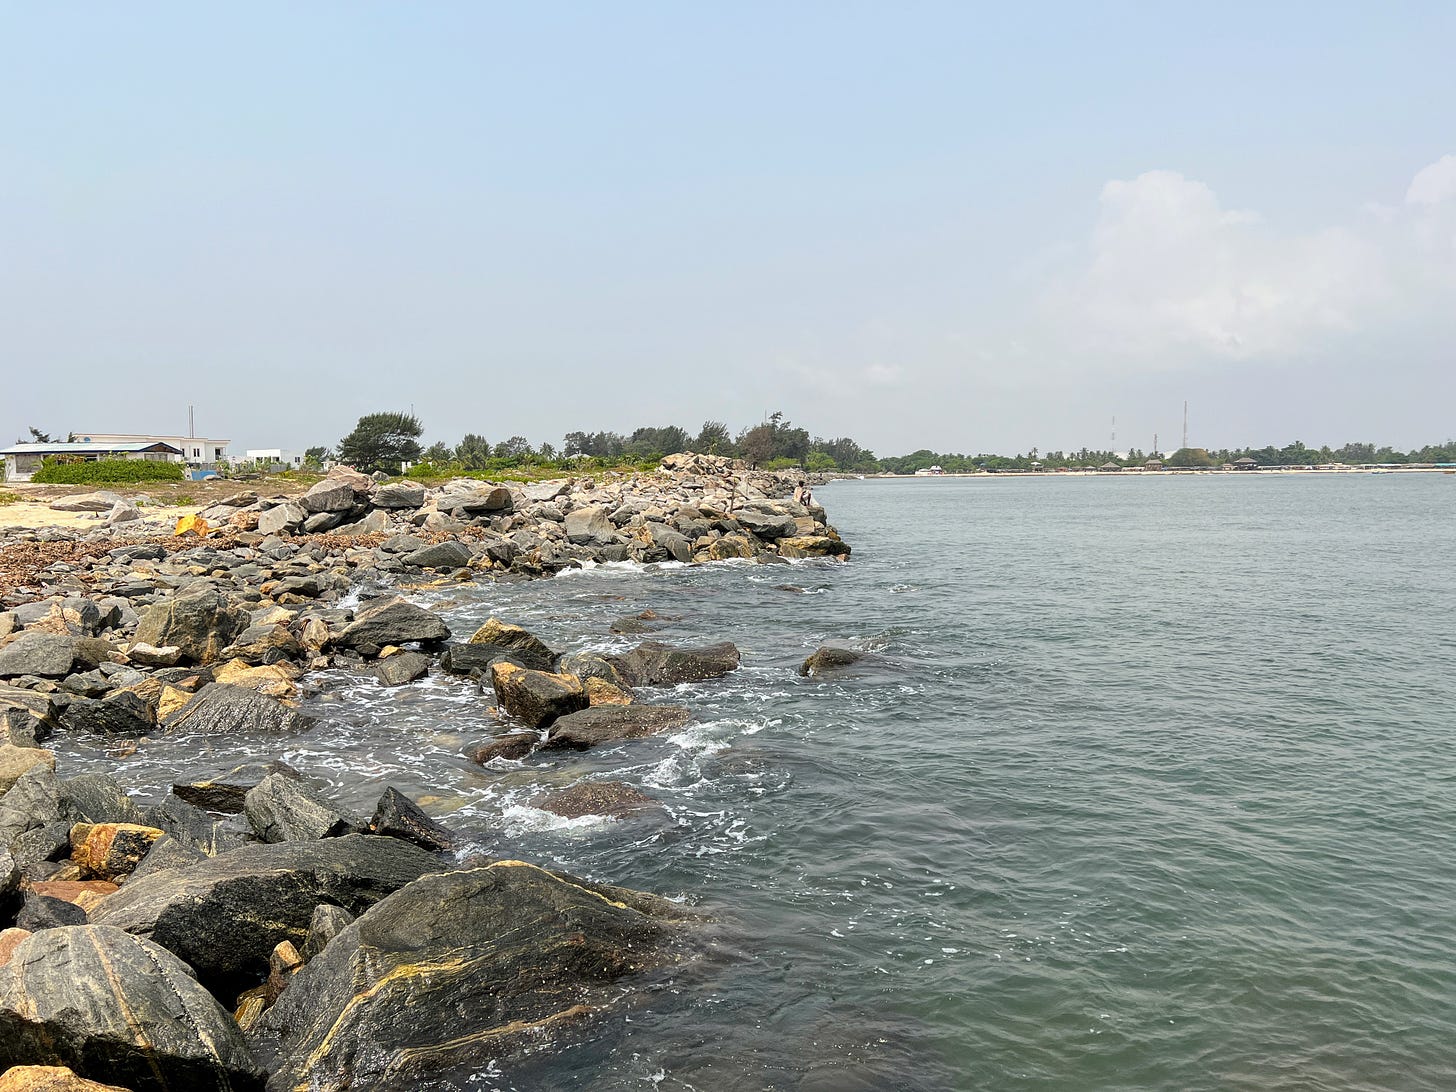 The shoreline at Takwa Bay in Lagos, Nigeria